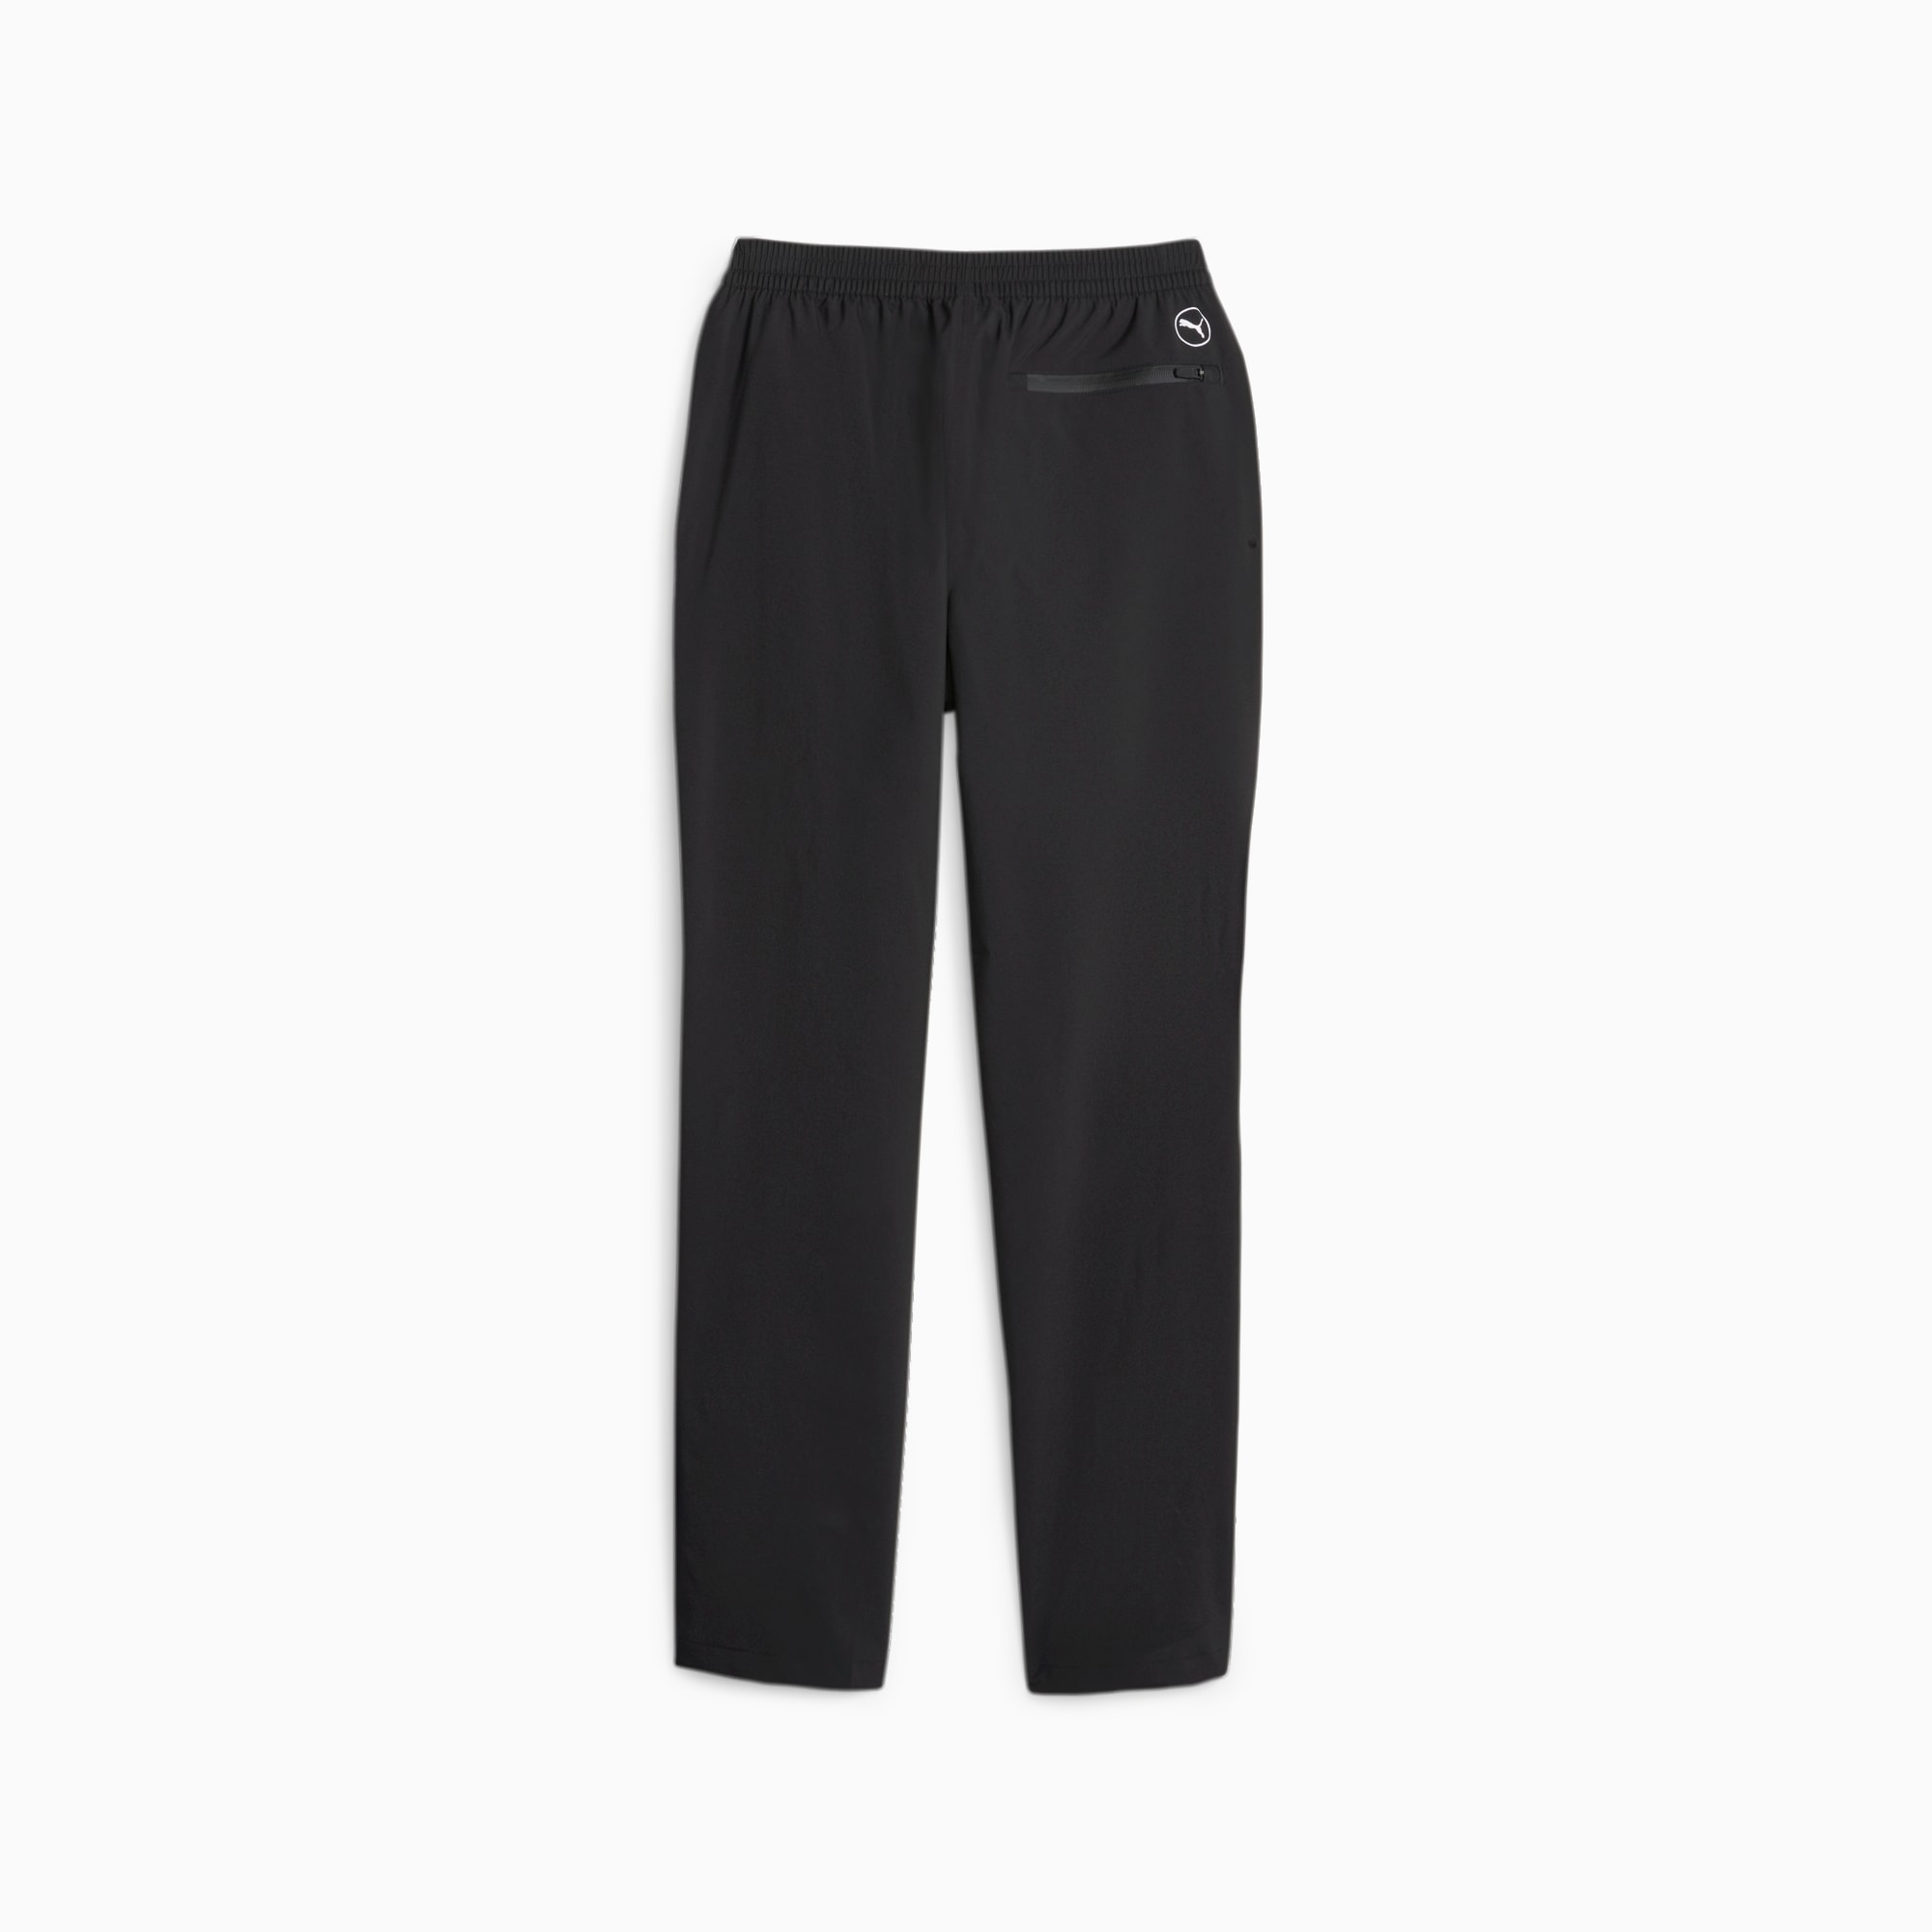 PUMA Drylbl Men's Rain Pants, Black, Size M/S, Clothing